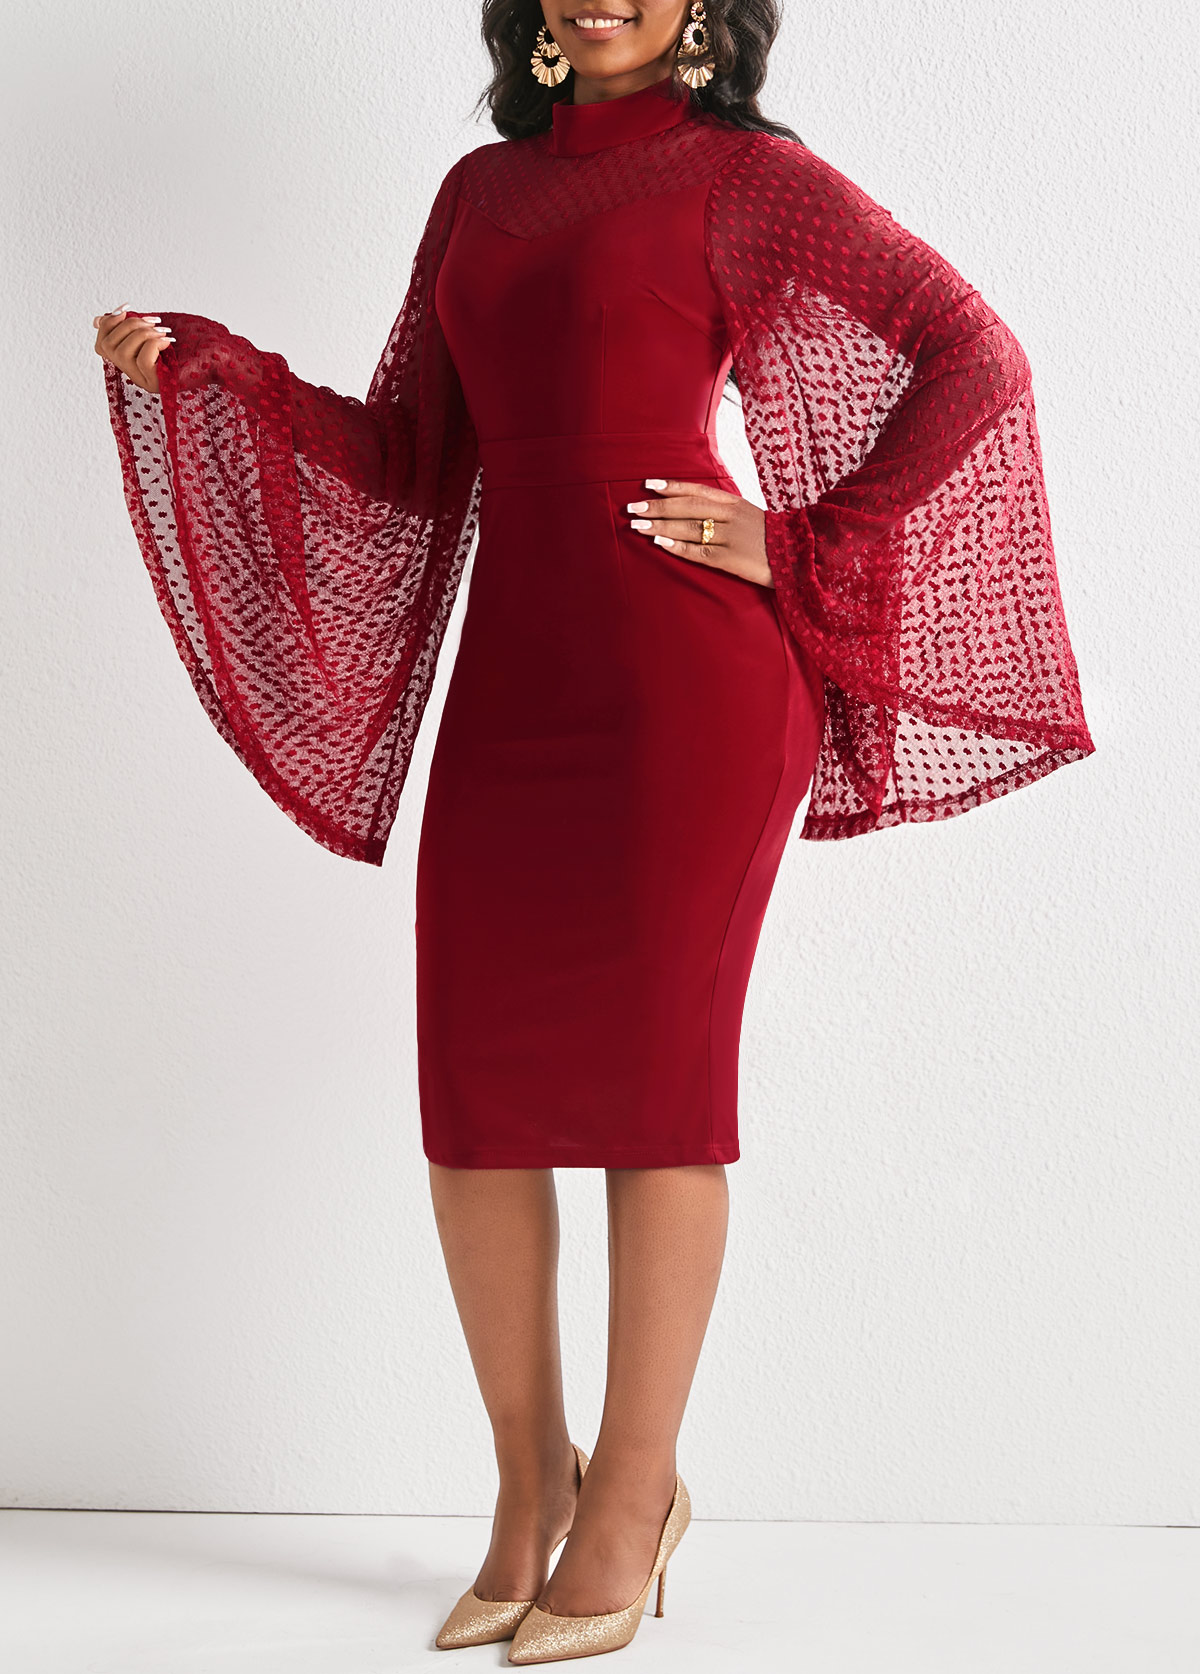 ROTITA Long Sleeve Wine Red Bodycon Dress